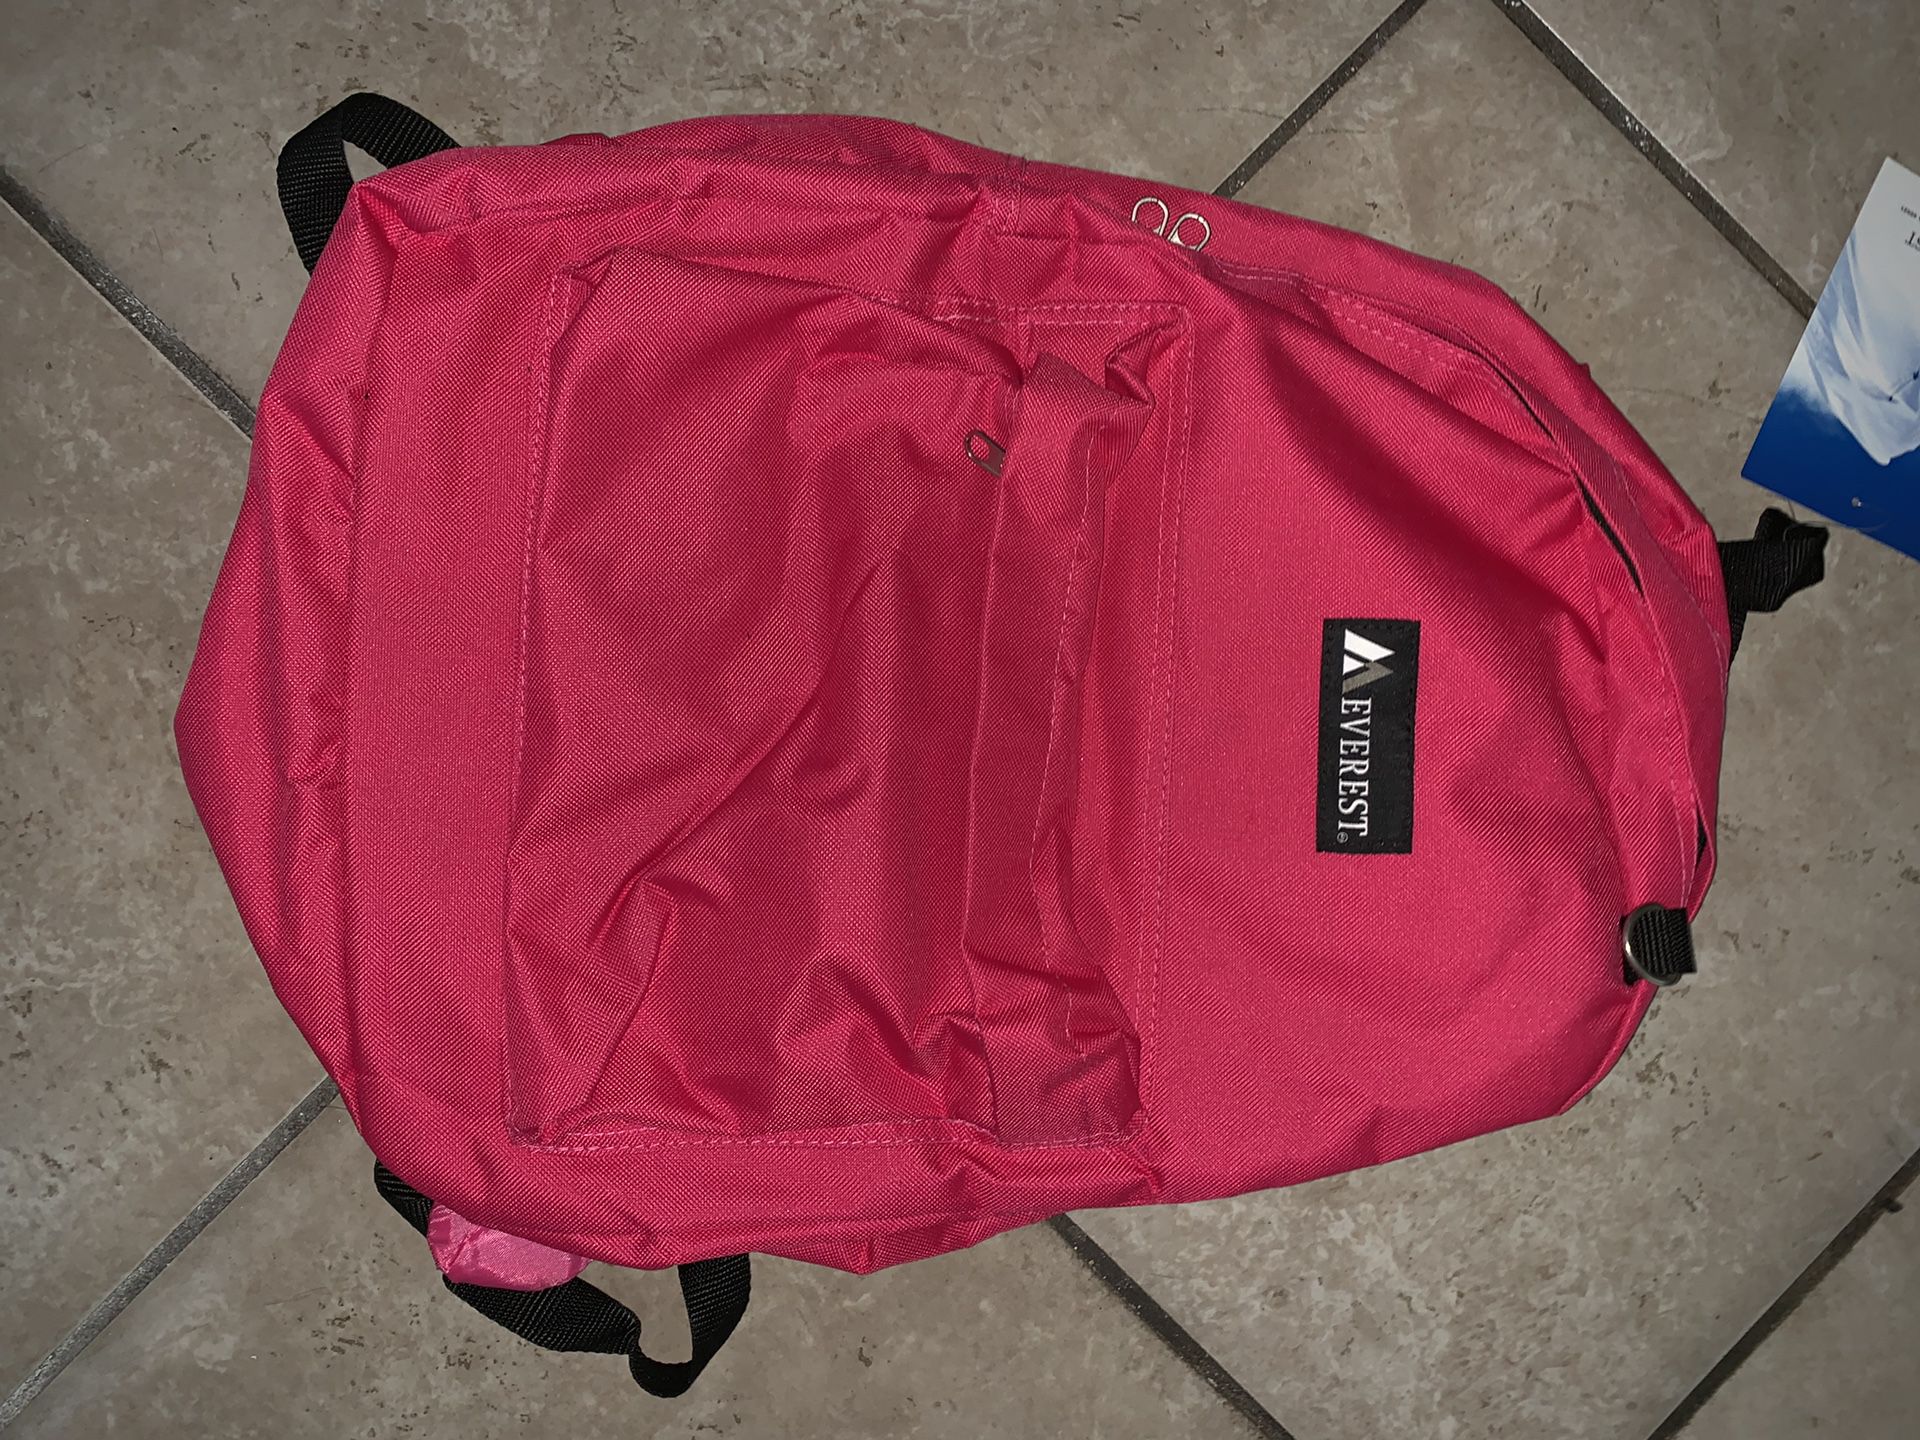 New Everest backpack 🎒